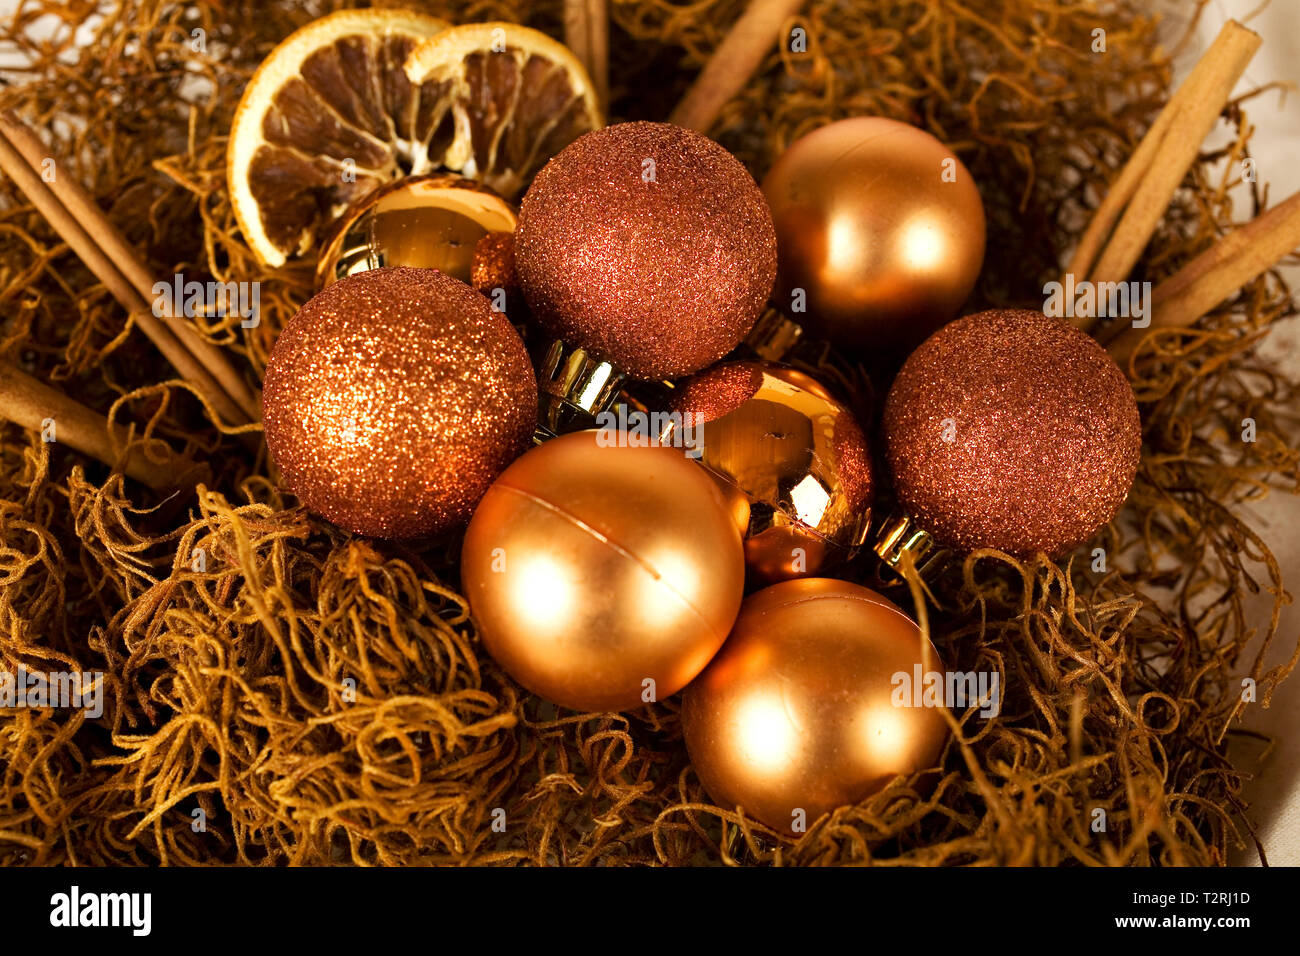 Christmas decoration with cinnamon sticks, orange slices and Christmas balls. Stock Photo